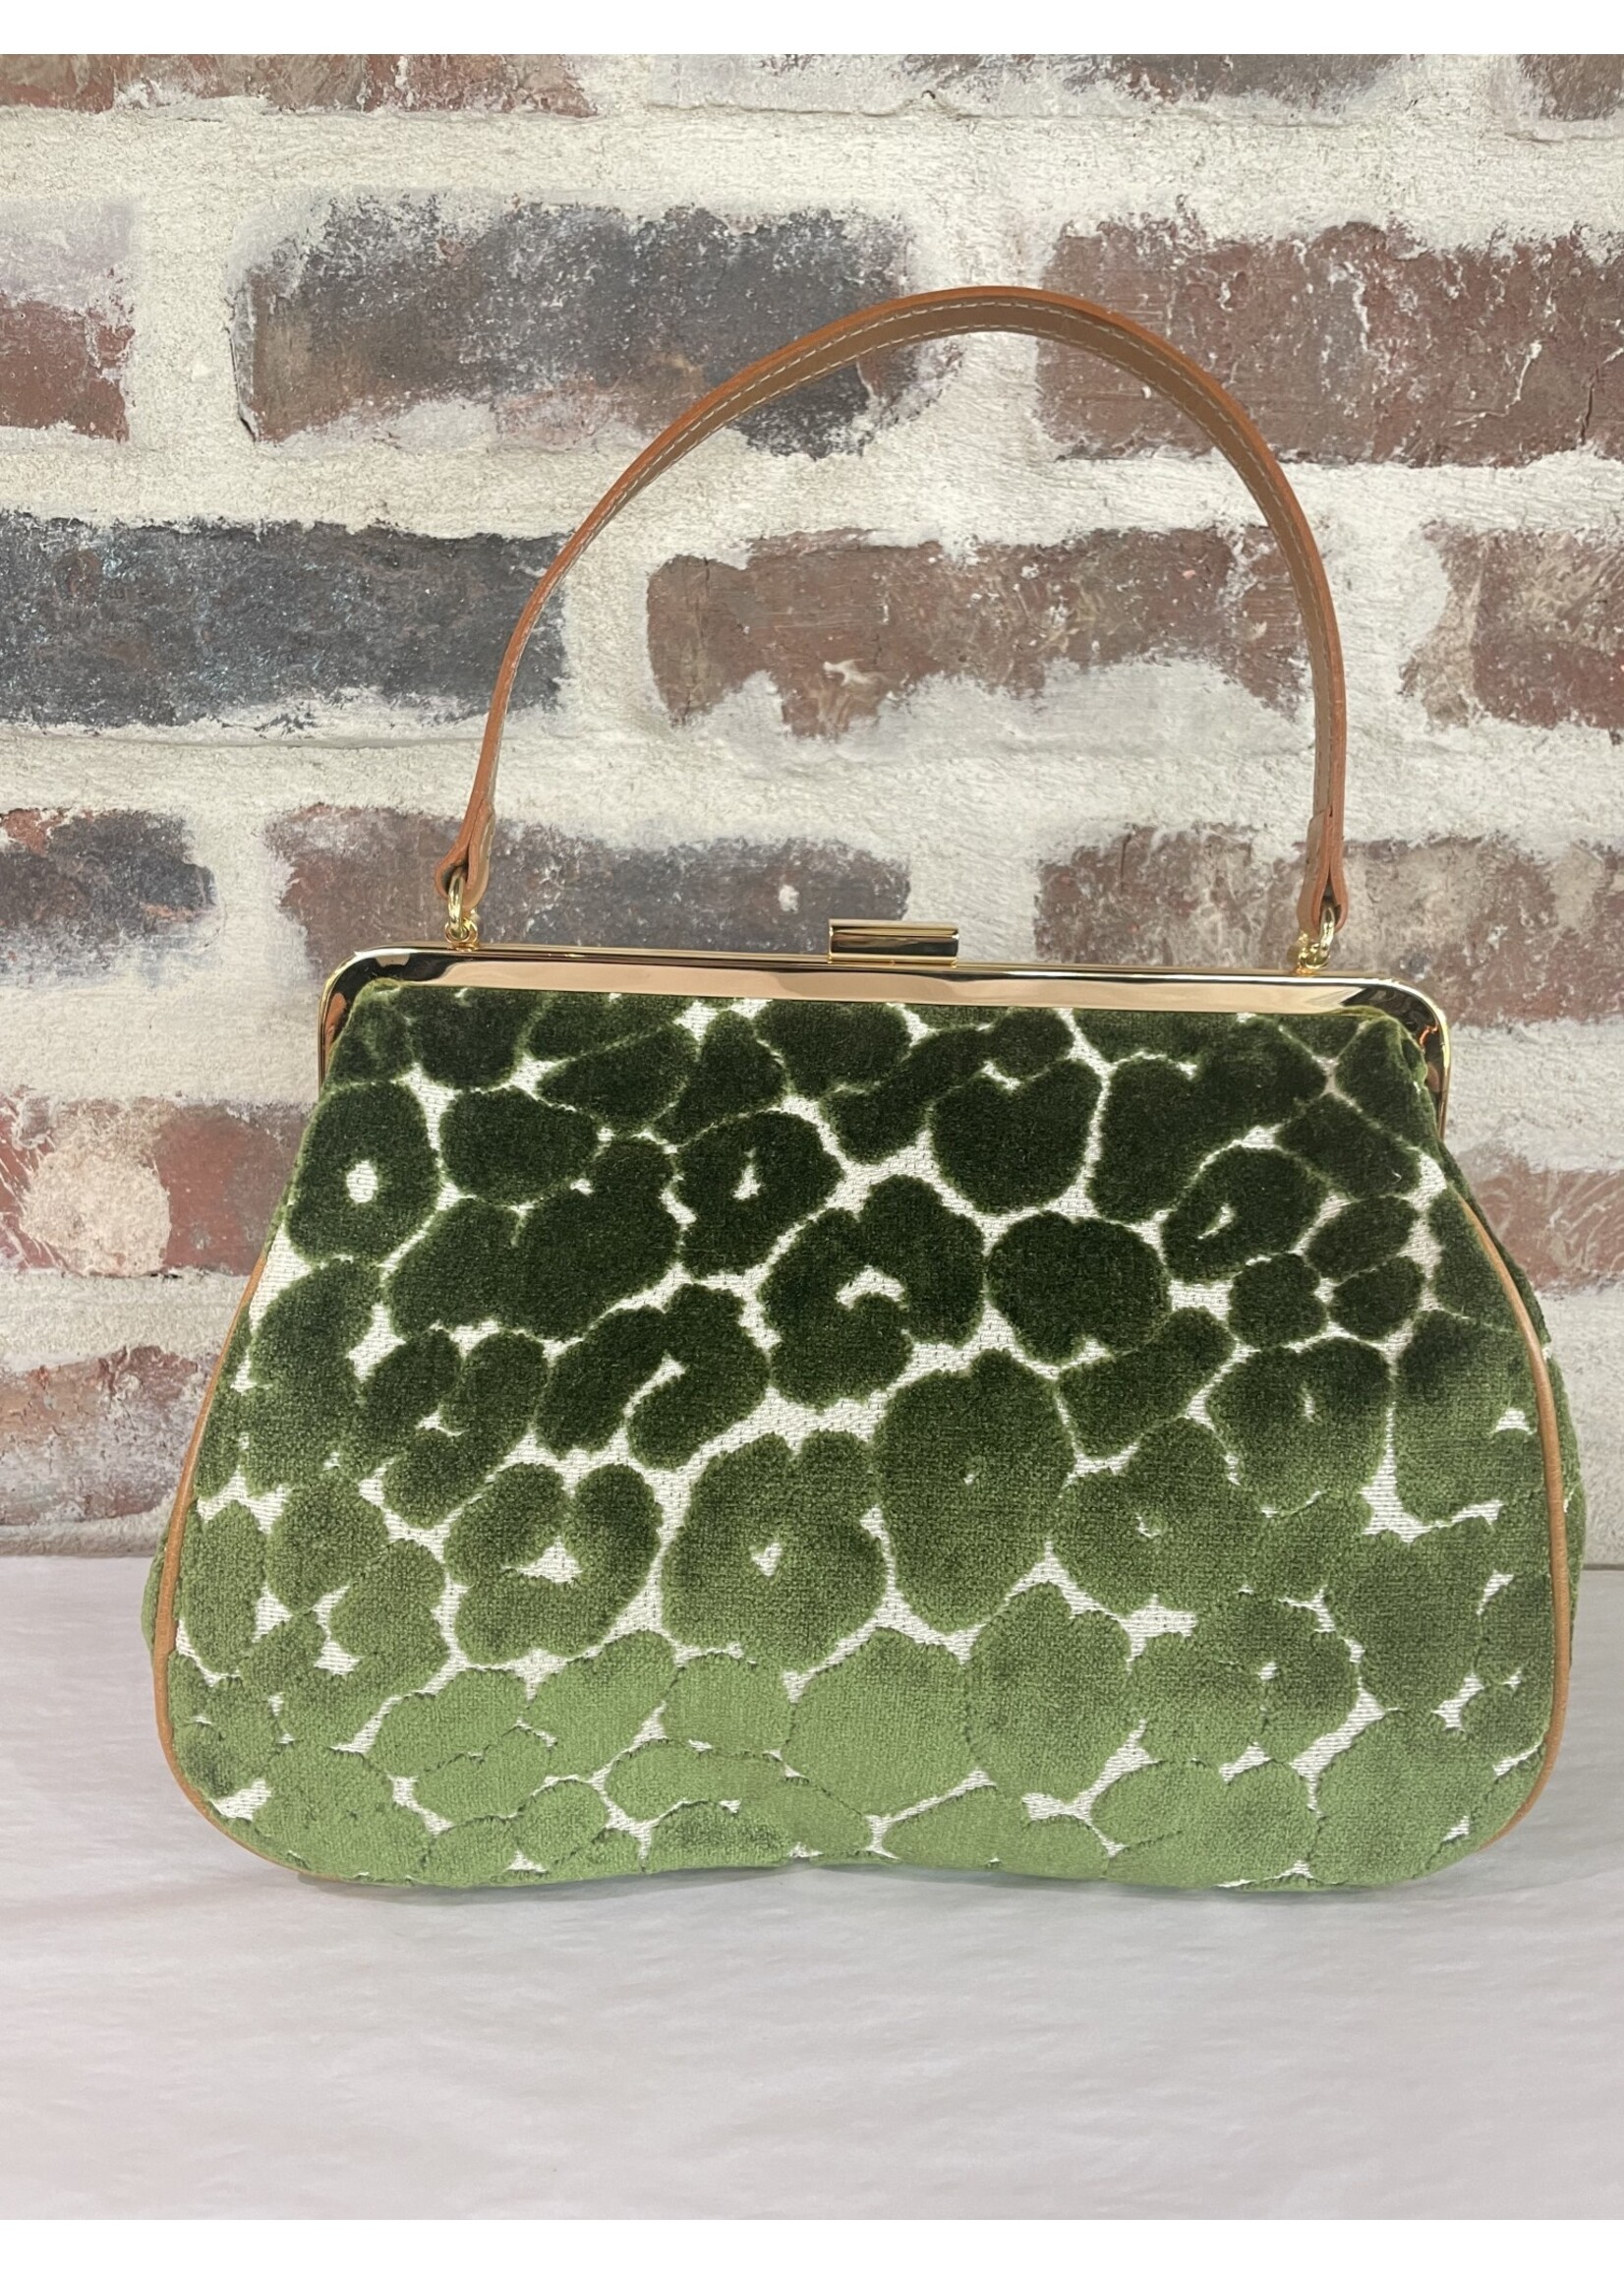 Glenda Gies Glenda Gies Gigi Bag, Emerald Green Cheetah Spots on Ivory